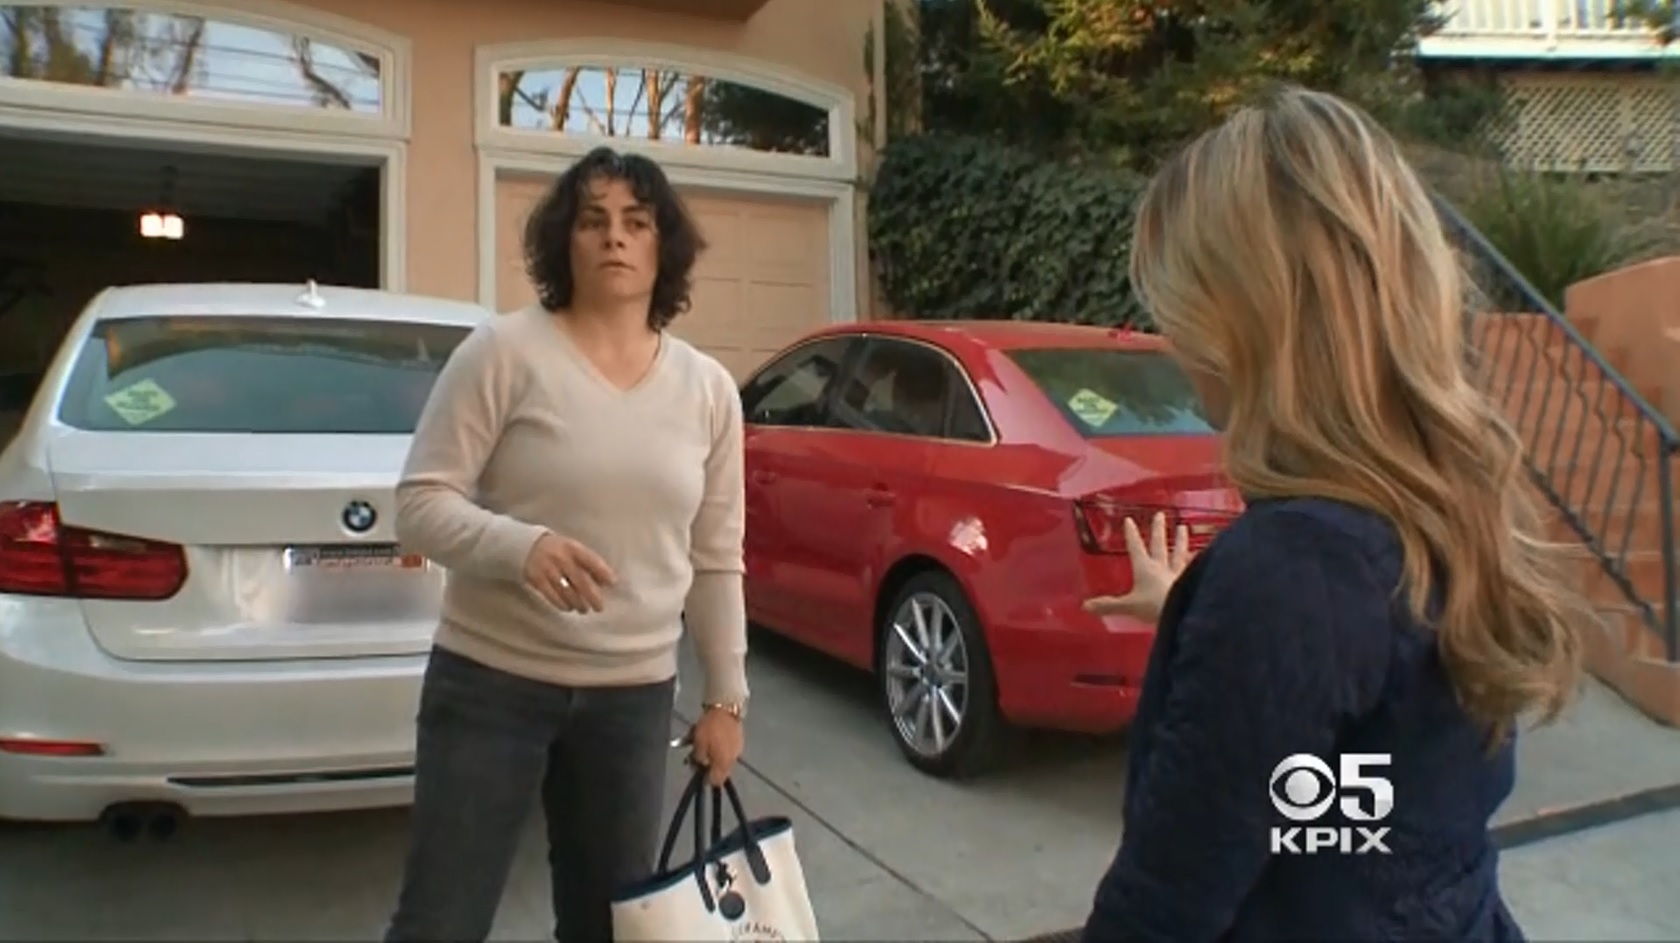 KPIX 5 reporter Susie Steimle speaks with Caroline Novak in front of a home in Redwood City. (CBS)